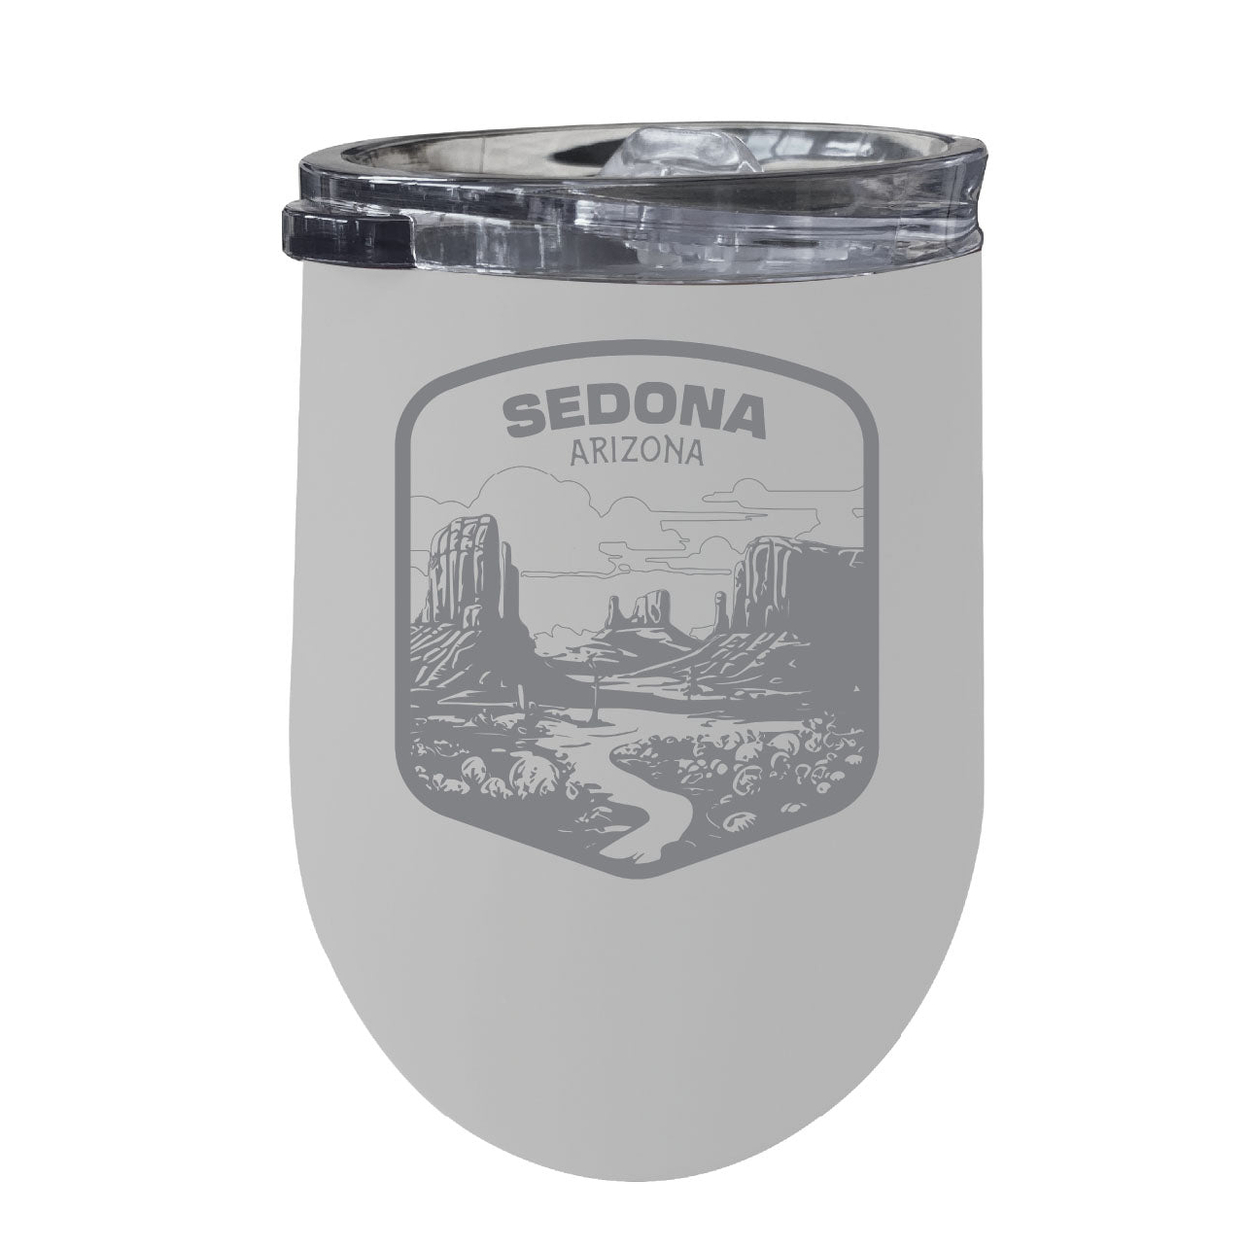 Sedona Arizona Souvenir 12 Oz Engraved Insulated Wine Stainless Steel Tumbler - Rose Gold,,Single Unit